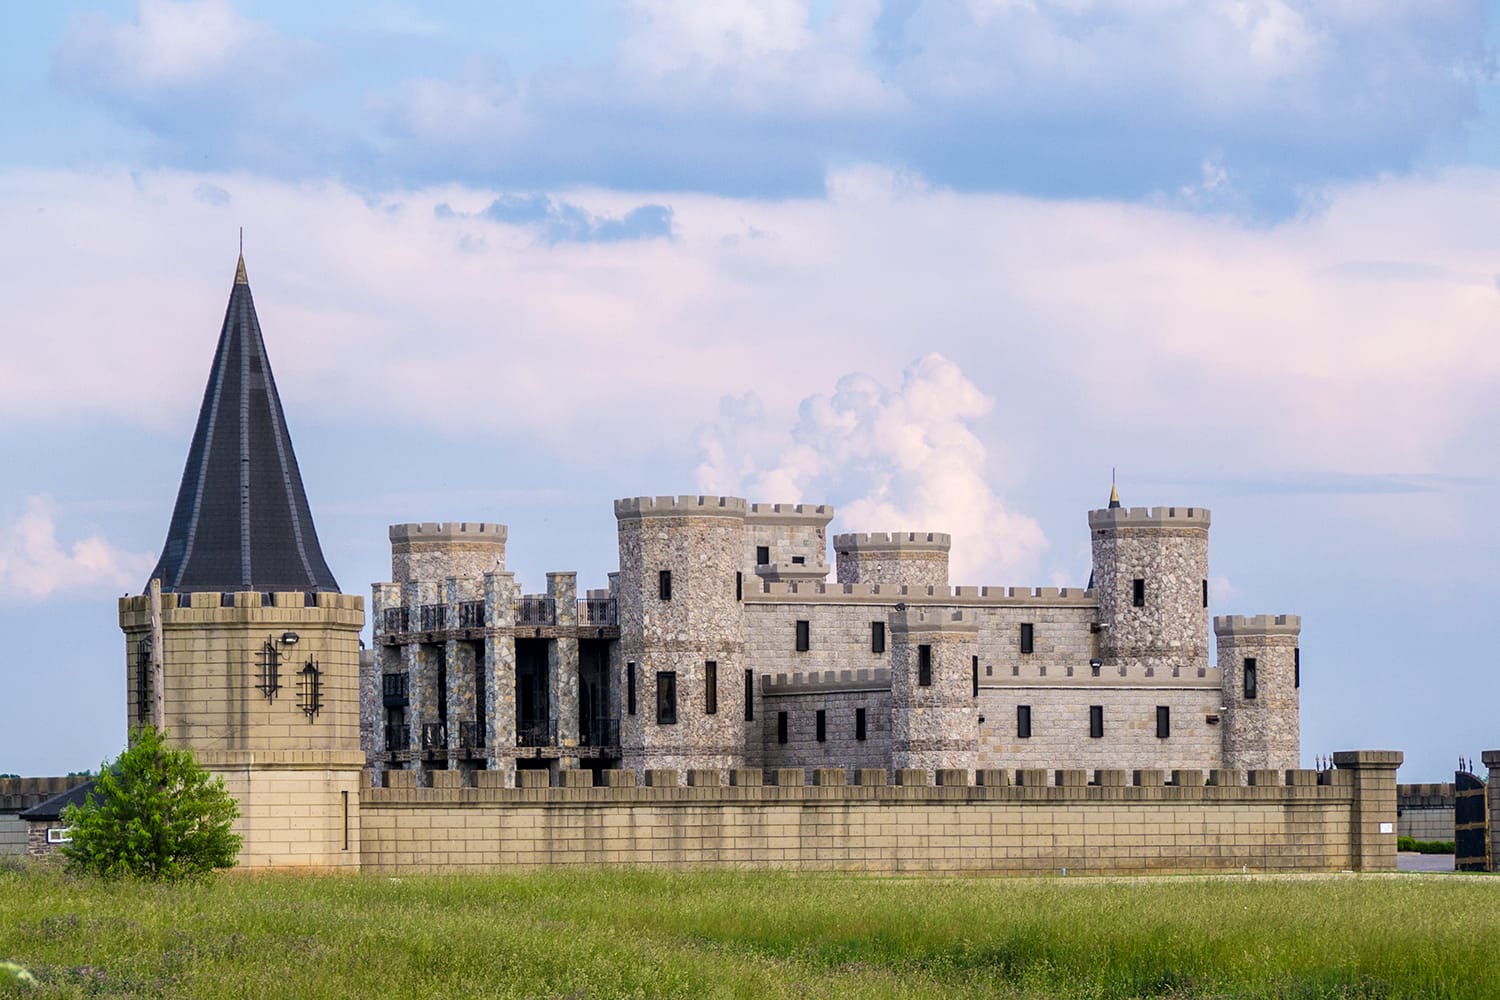 Kentucky Castle in the USA